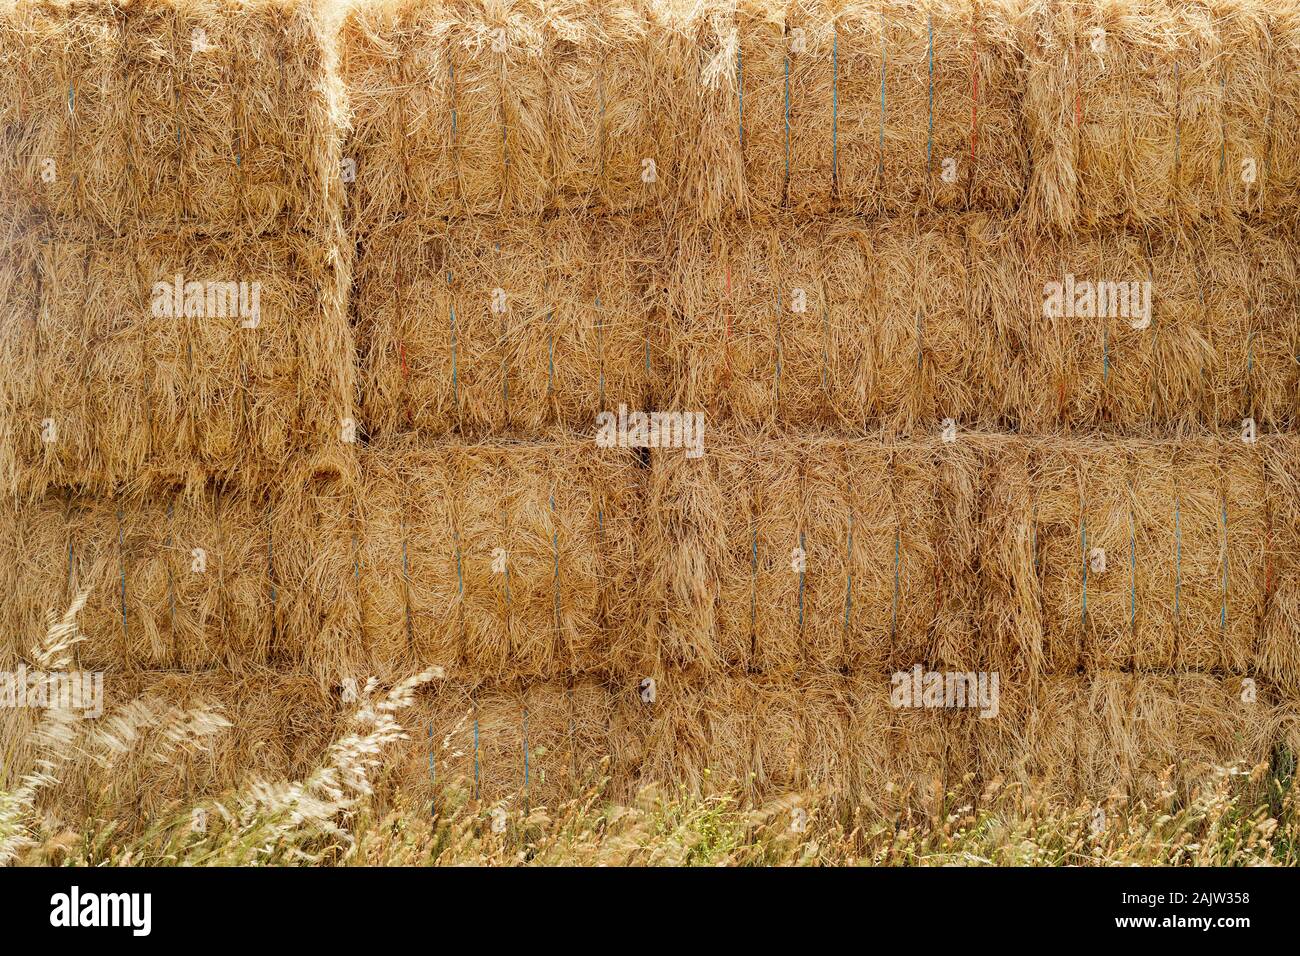 A photo of hay bales on a farm ready to transportation. Closeup photo. Stock Photo